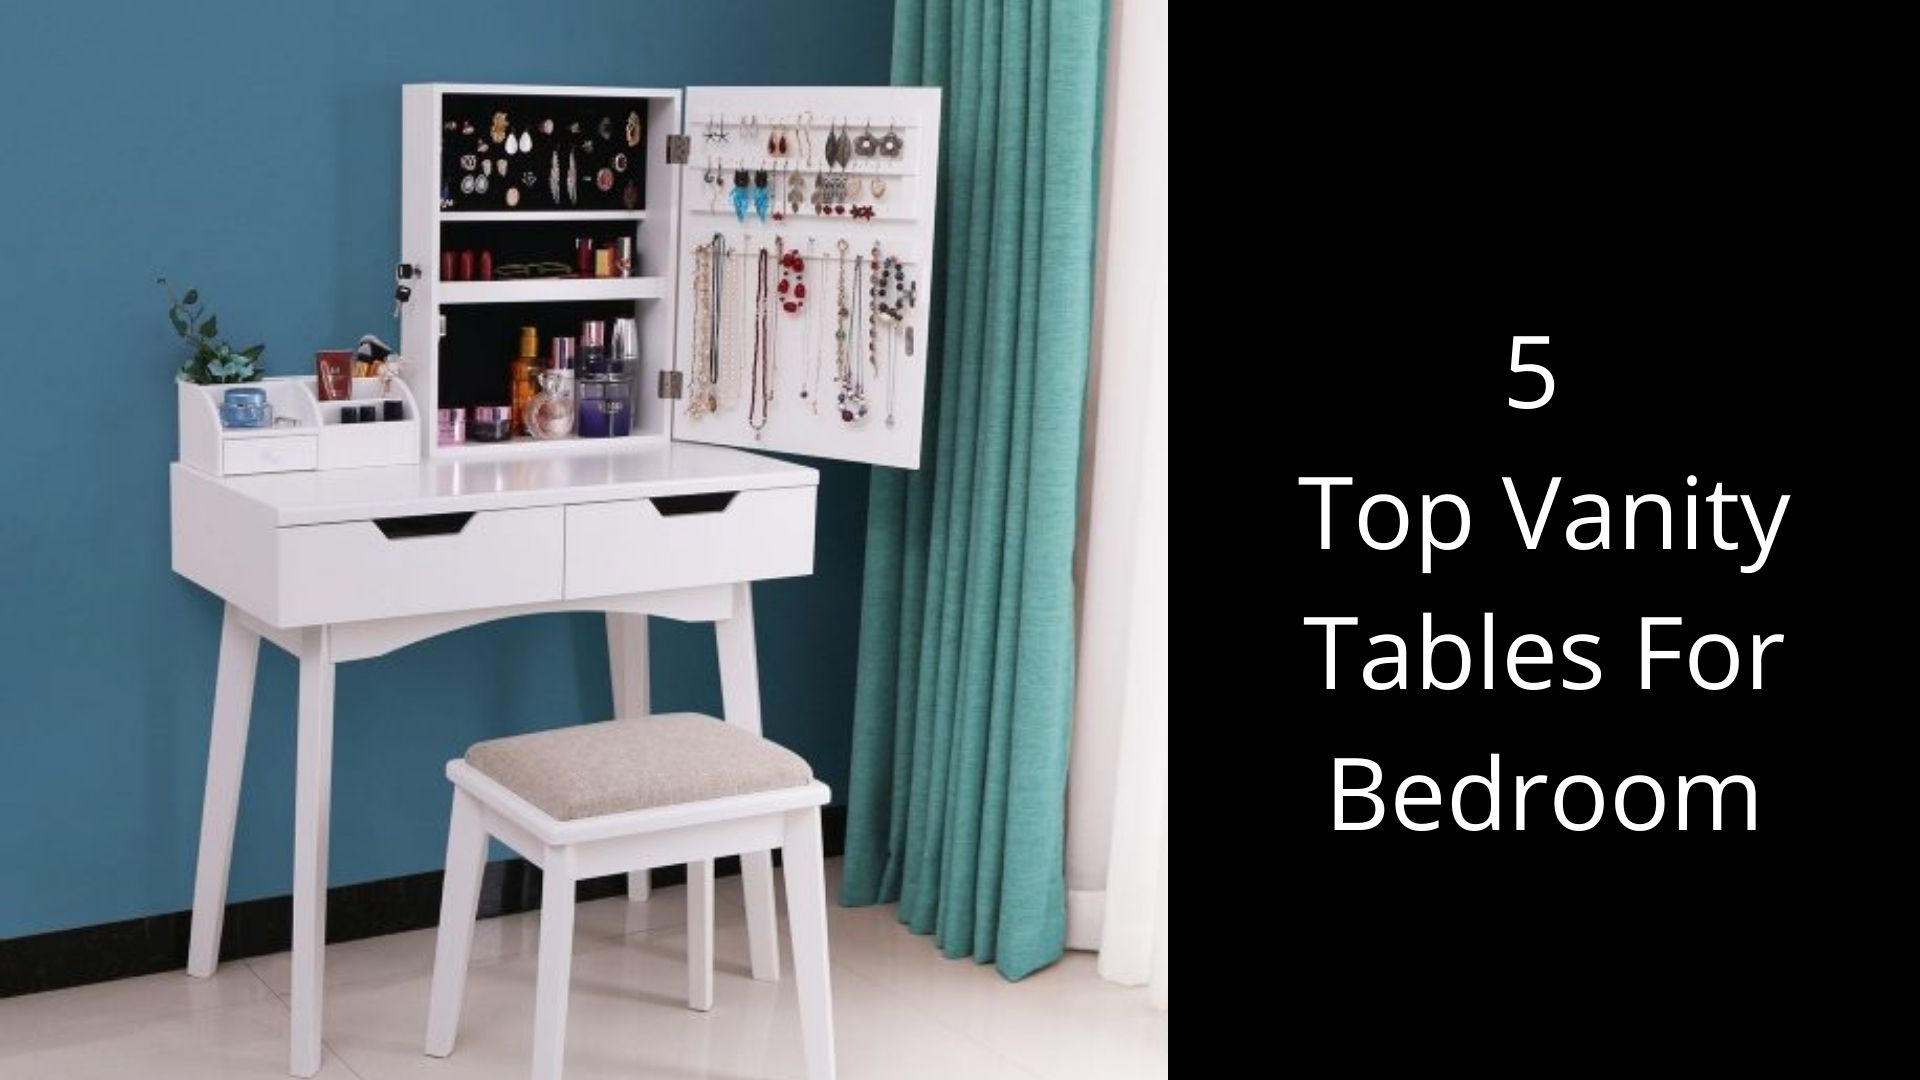 Top Vanity Tables For Bedroom